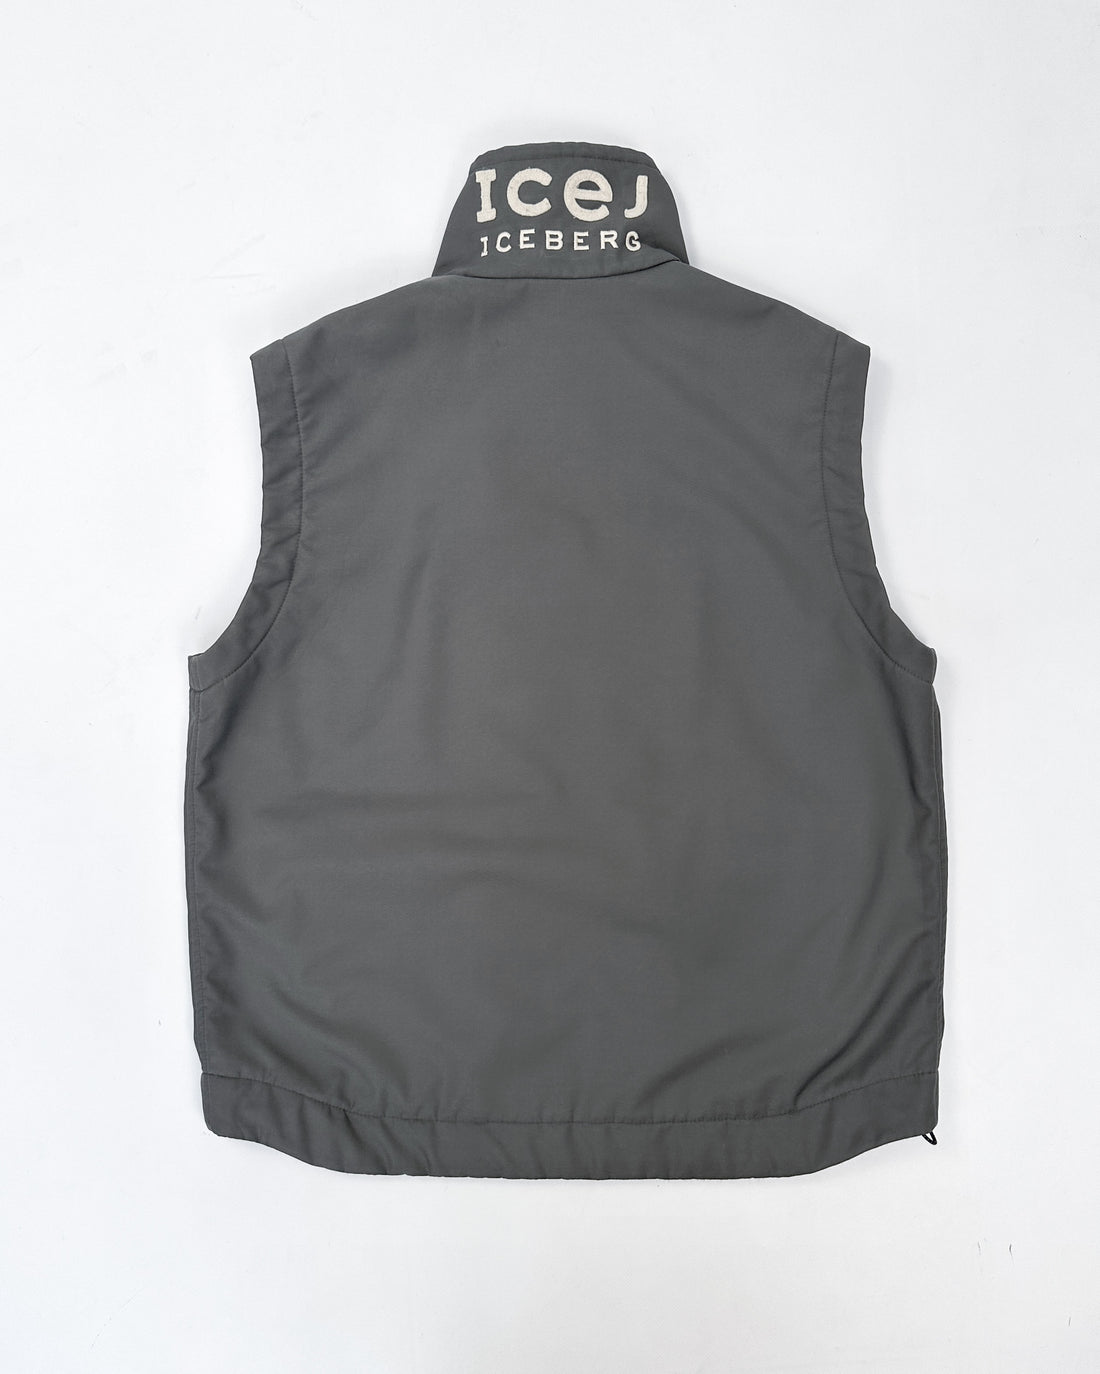 Iceberg Grey Body Warmer Vest 2000's